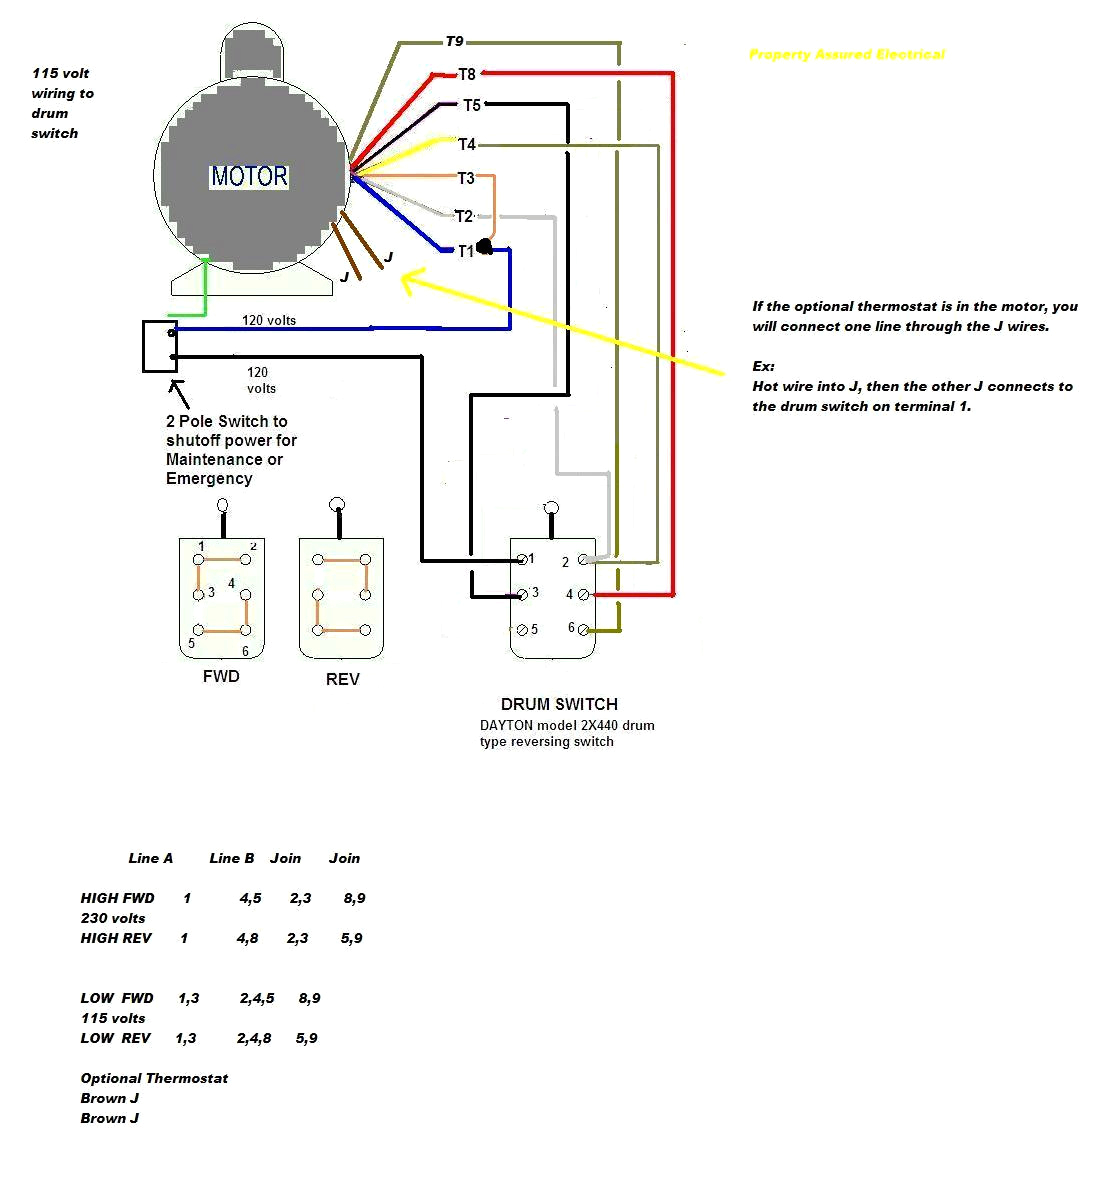 baldor ac motor connection diagram wiring diagram paperhp baldor motor capacitor wiring likewise 1 2 hp